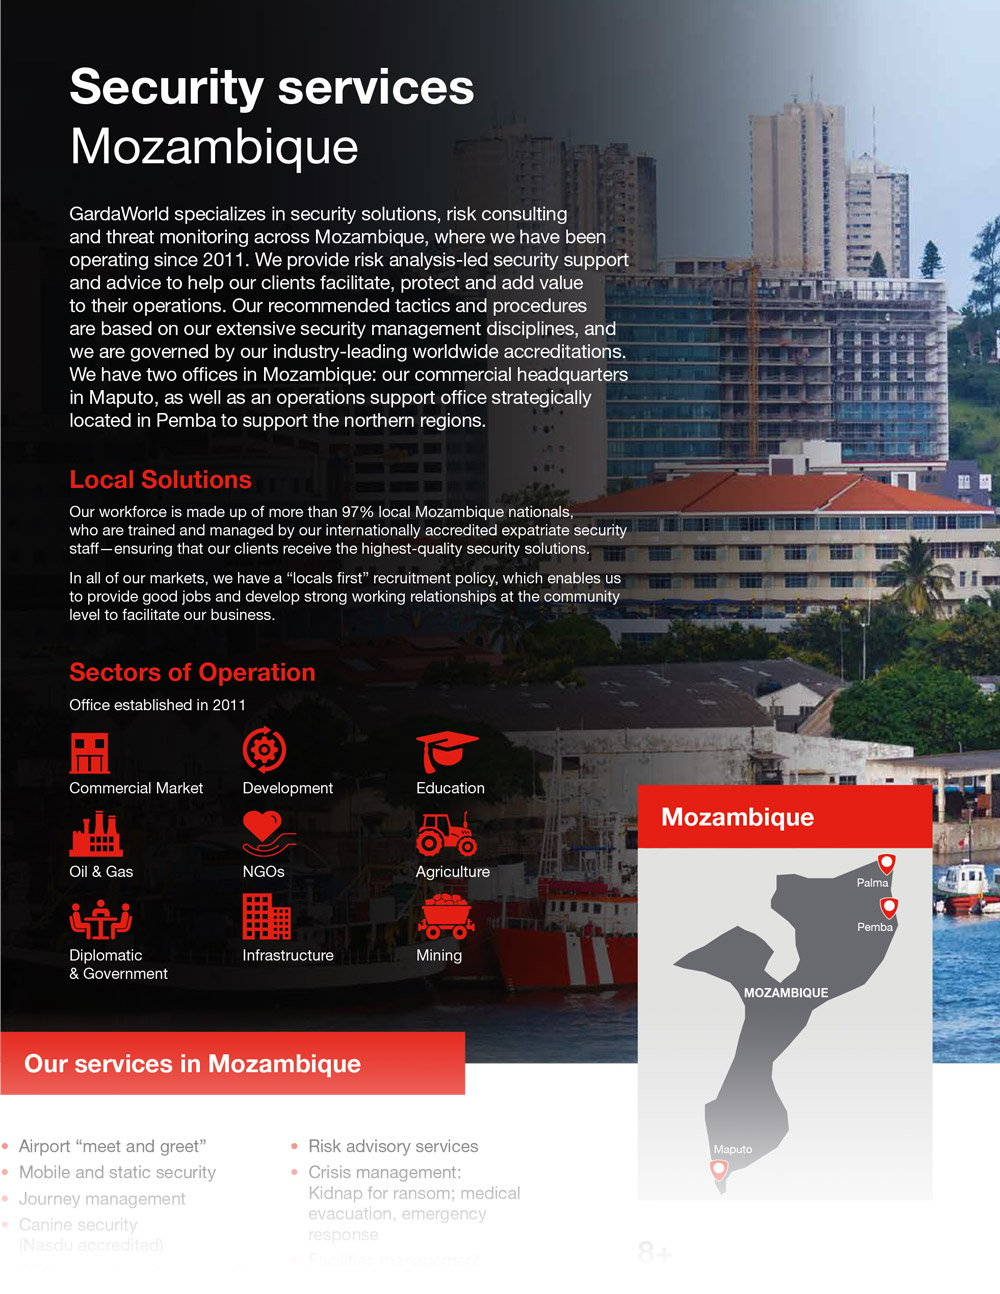 Mozambique Security Services